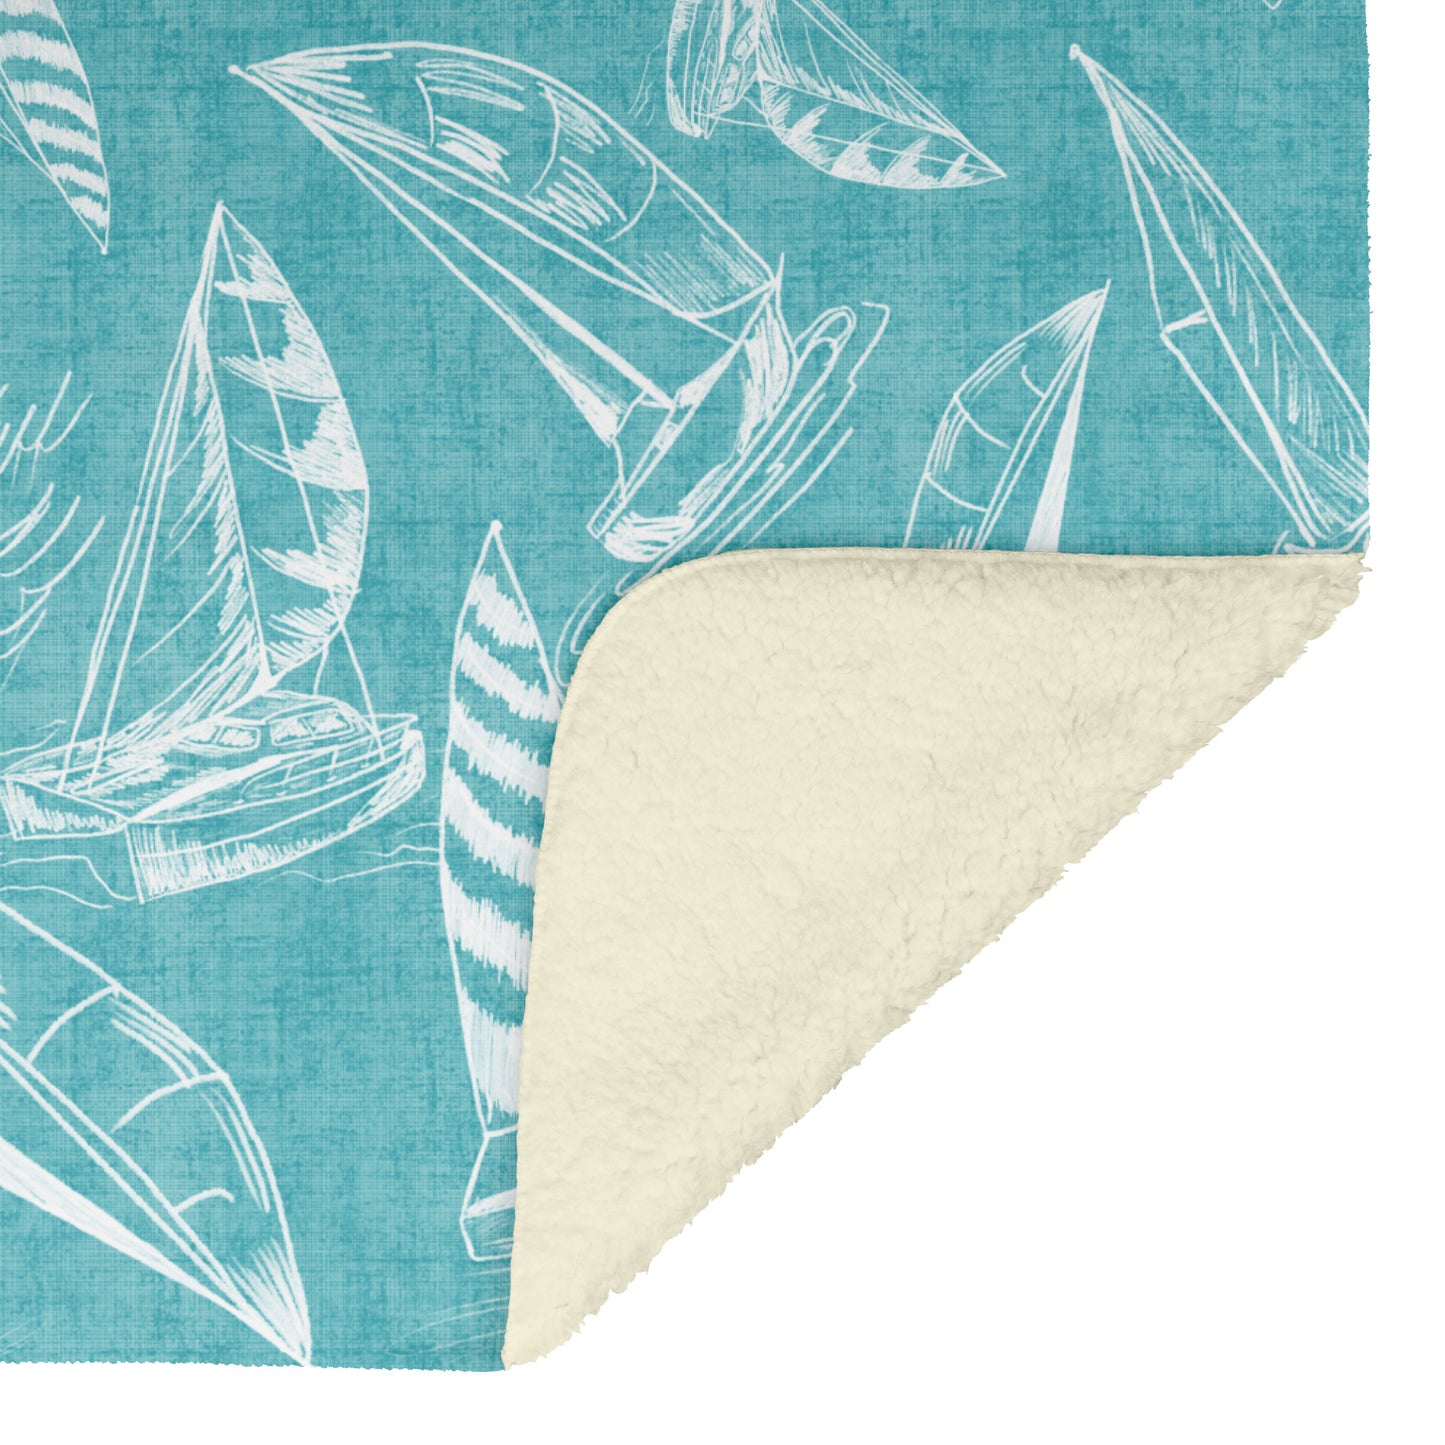 Sailboat Sketches on Teal Linen Texture Background, Fleece Blanket